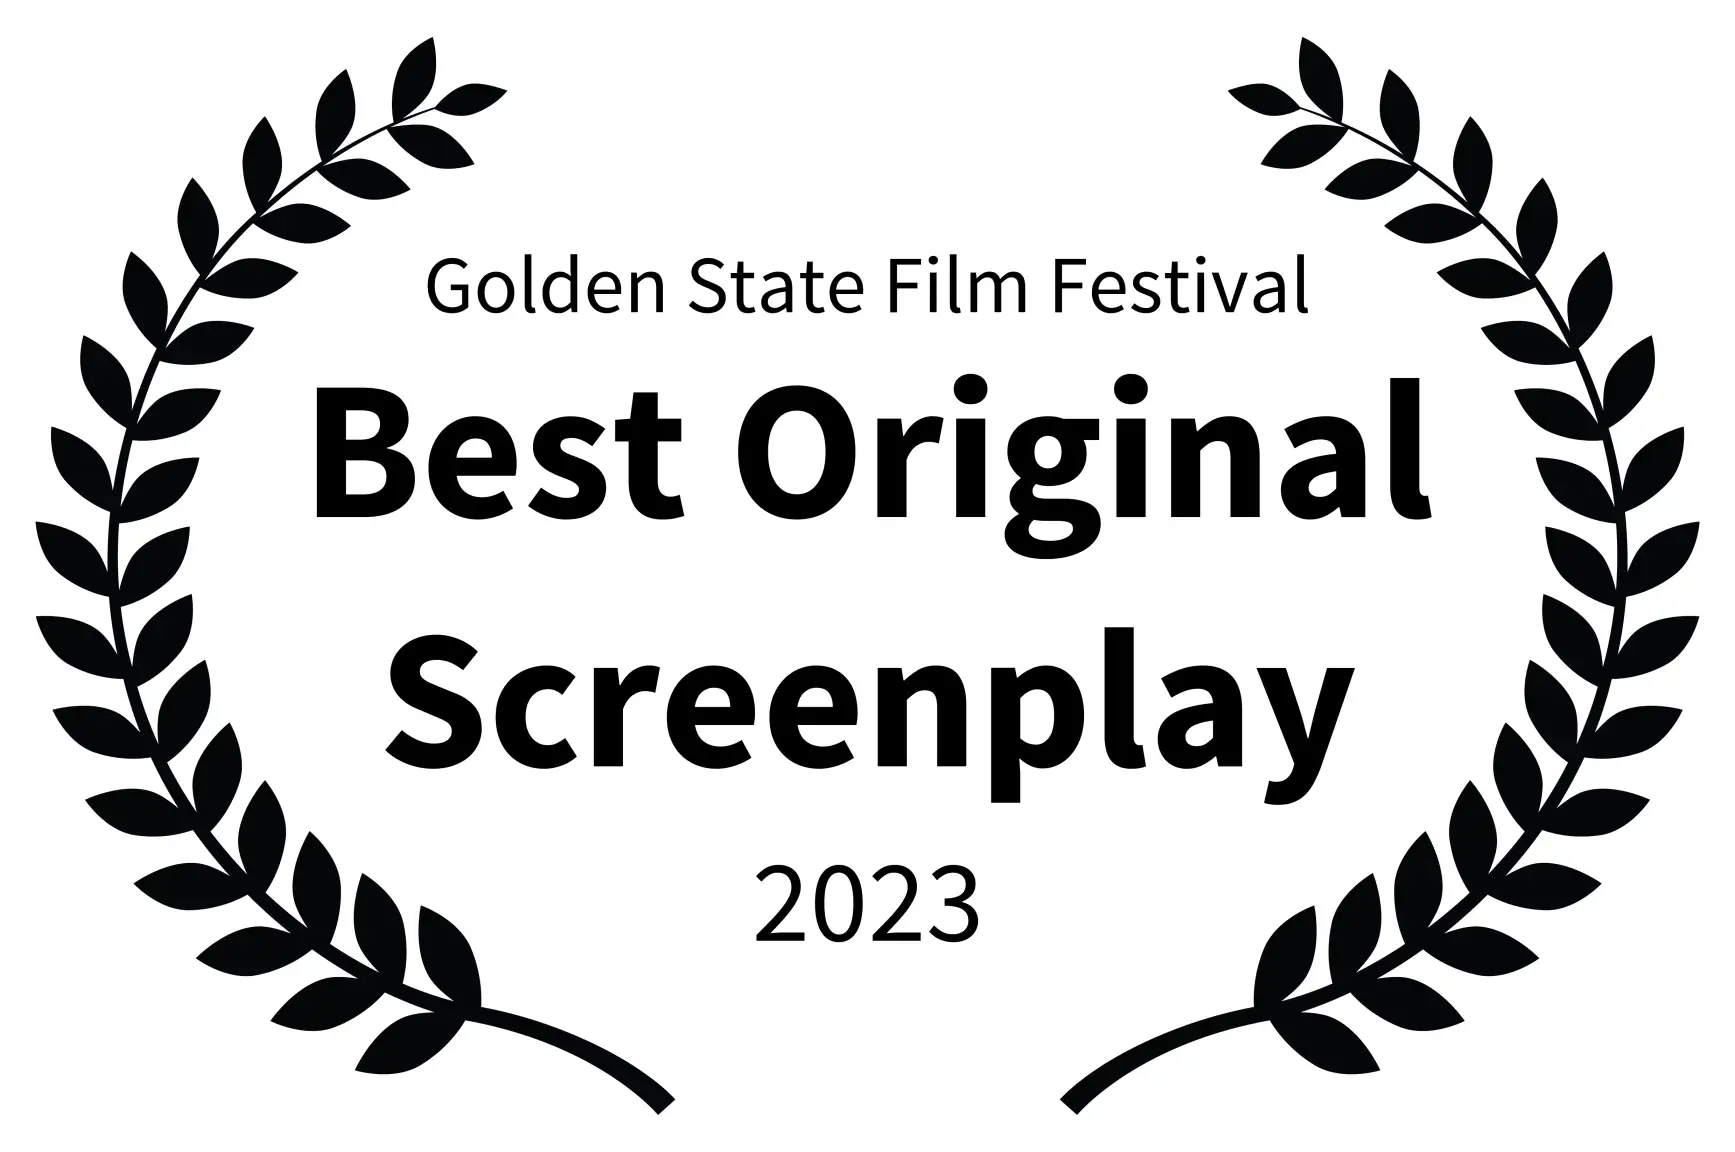 Golden State Film Festival - Best Original Screenplay - 2023